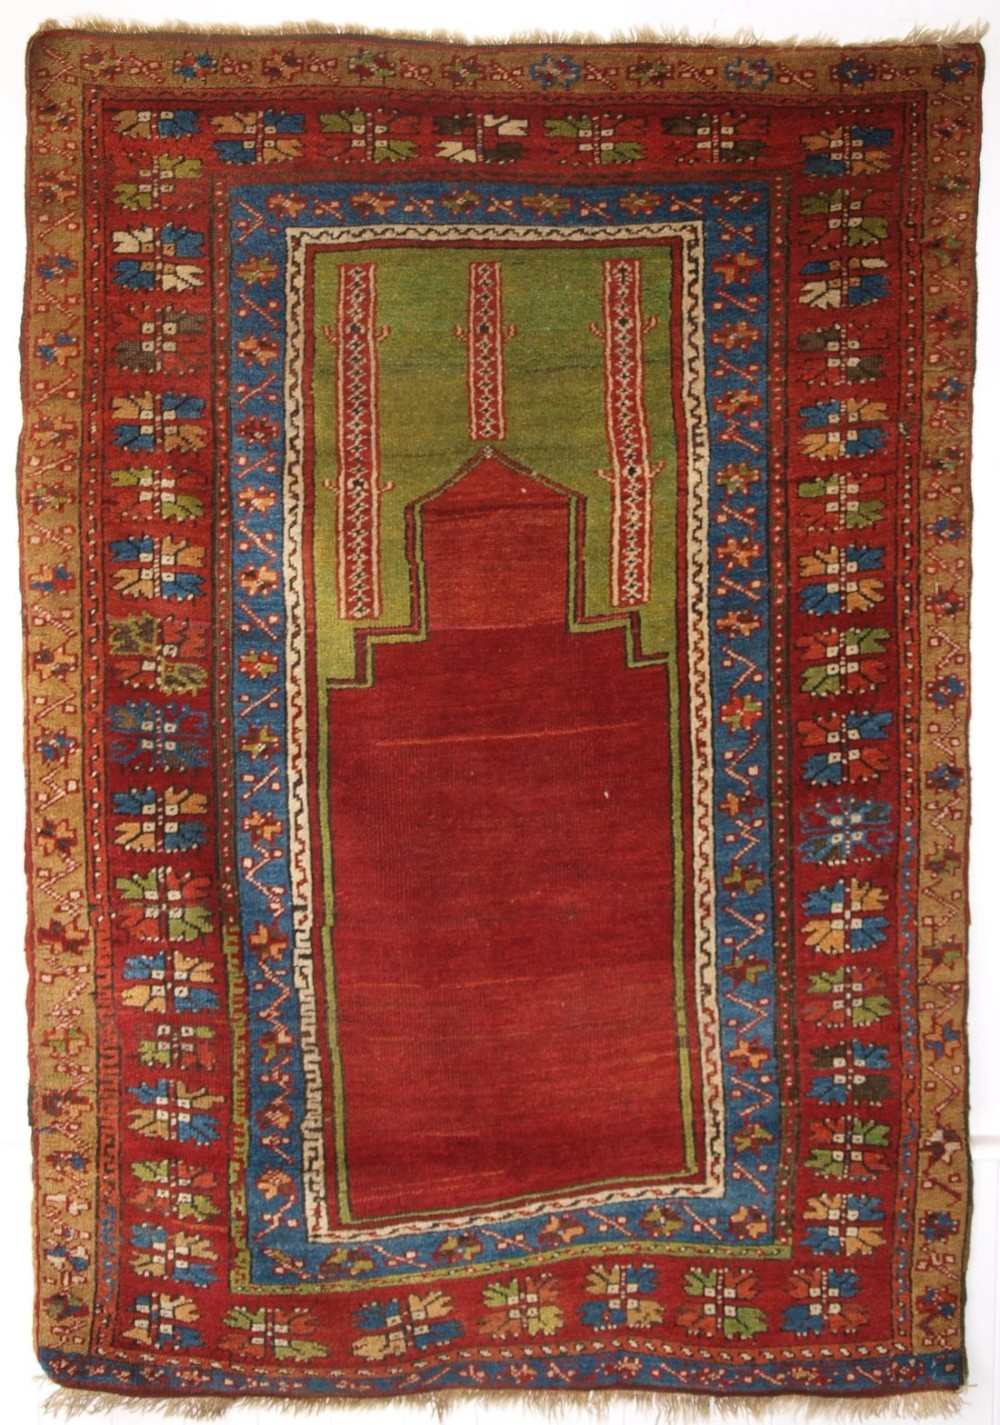 antique turkish konya region prayer rug superb green and red circa 1900